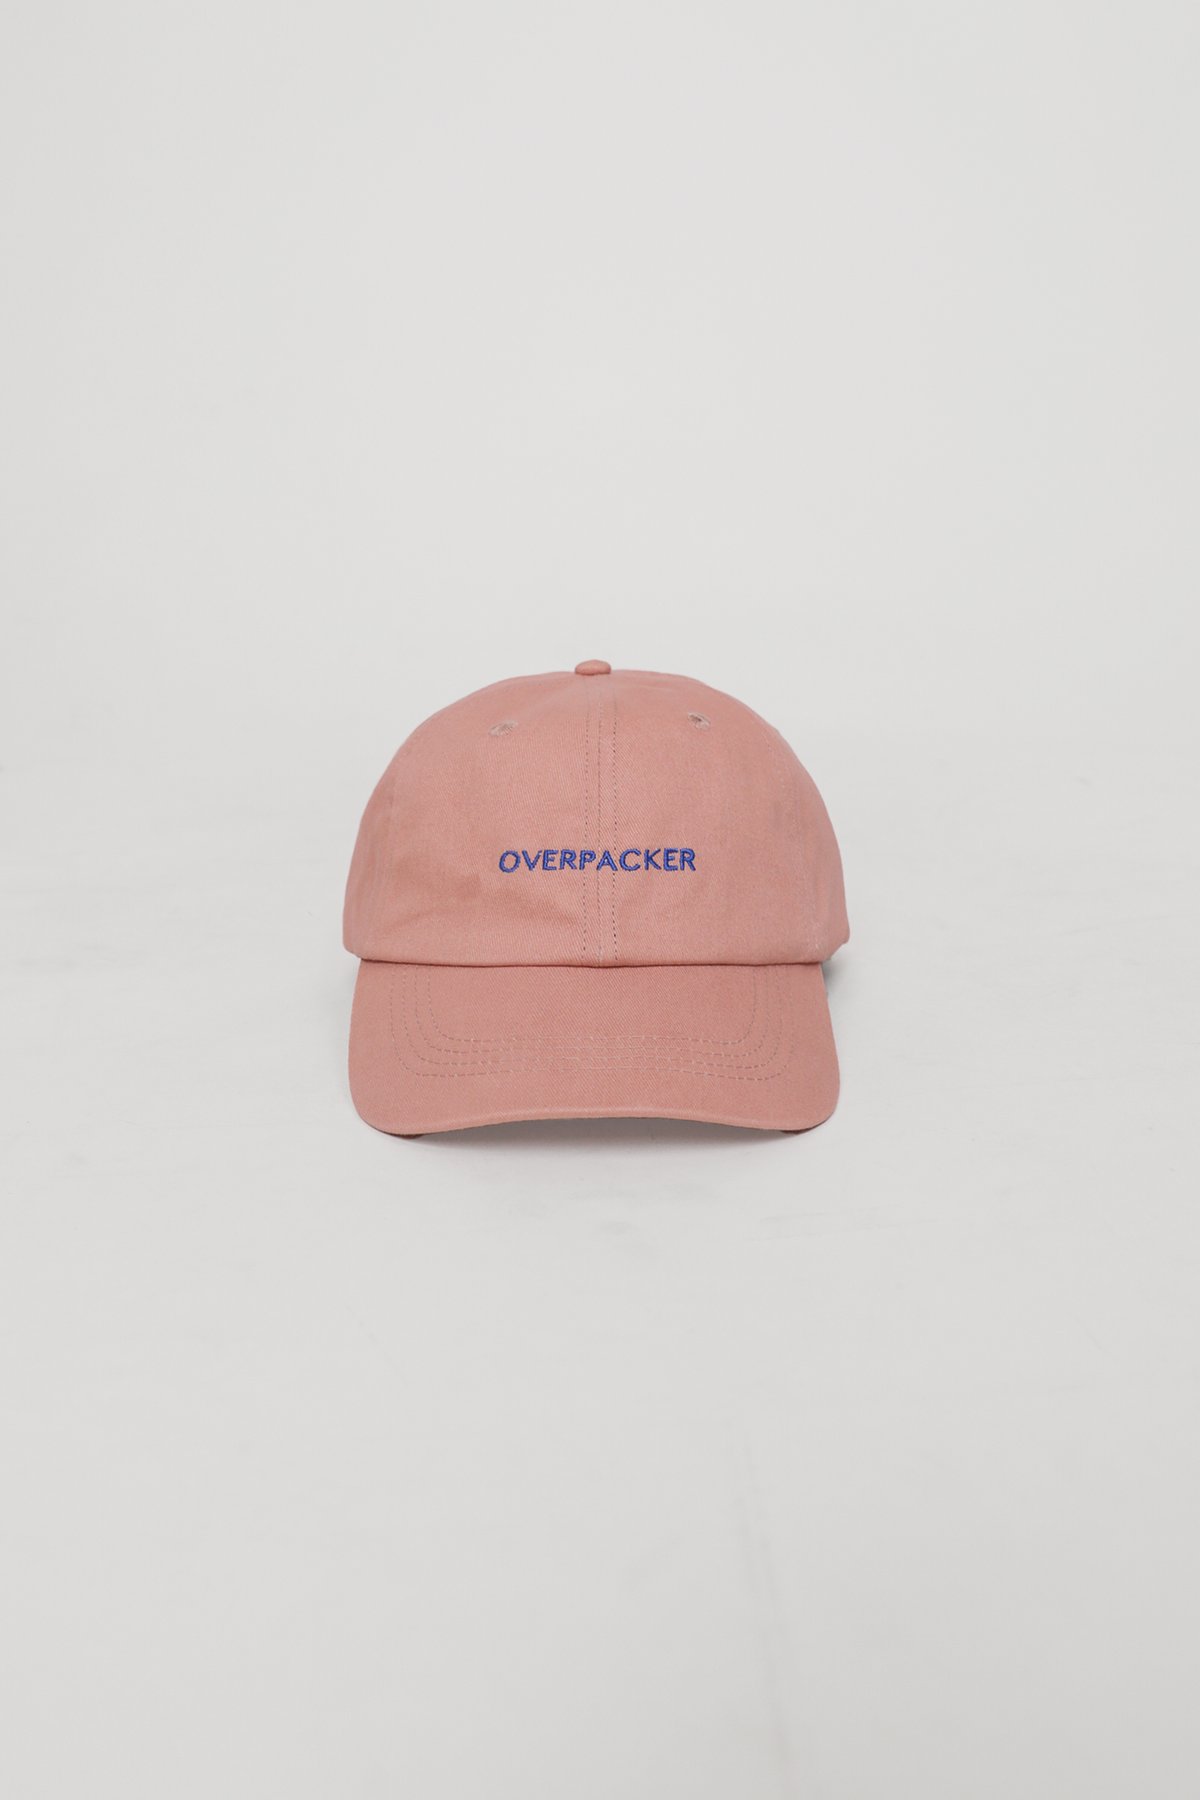 Overpacker Cap (Peach)